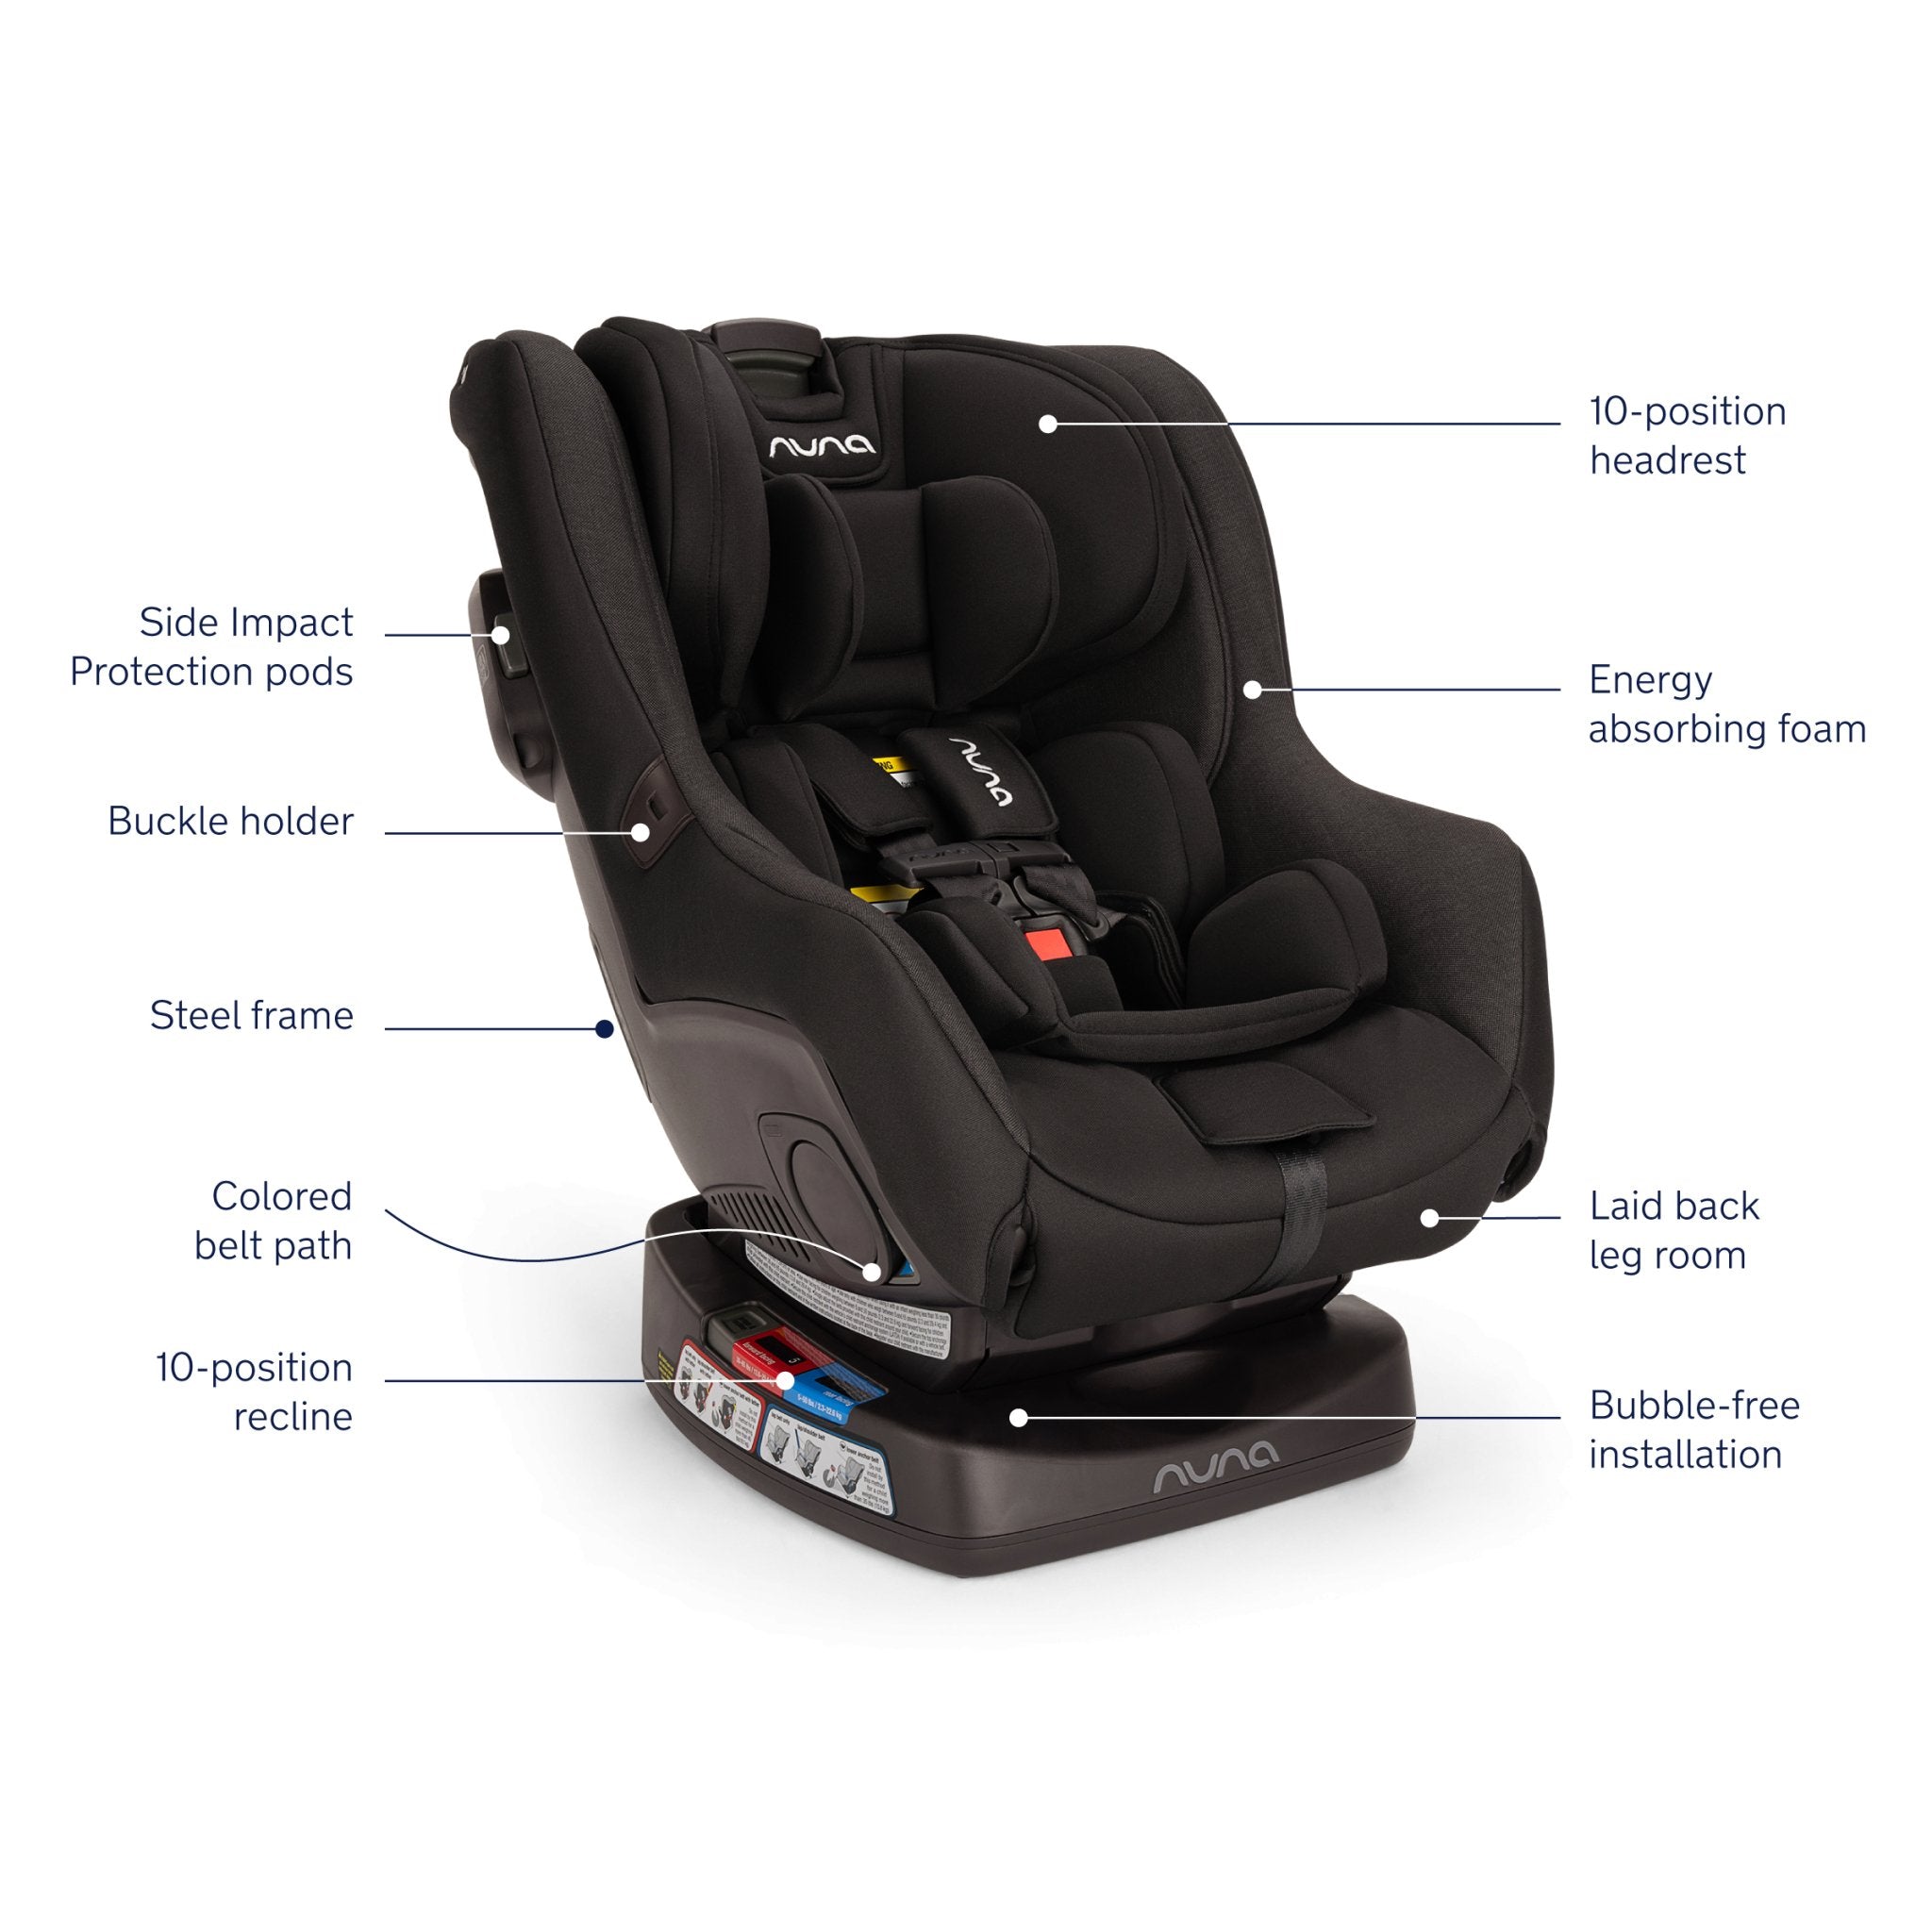 Nuna RAVA Convertible Car Seat with Flame Retardant Free, Riveted - ANB Baby -8720246542806$300 - $500